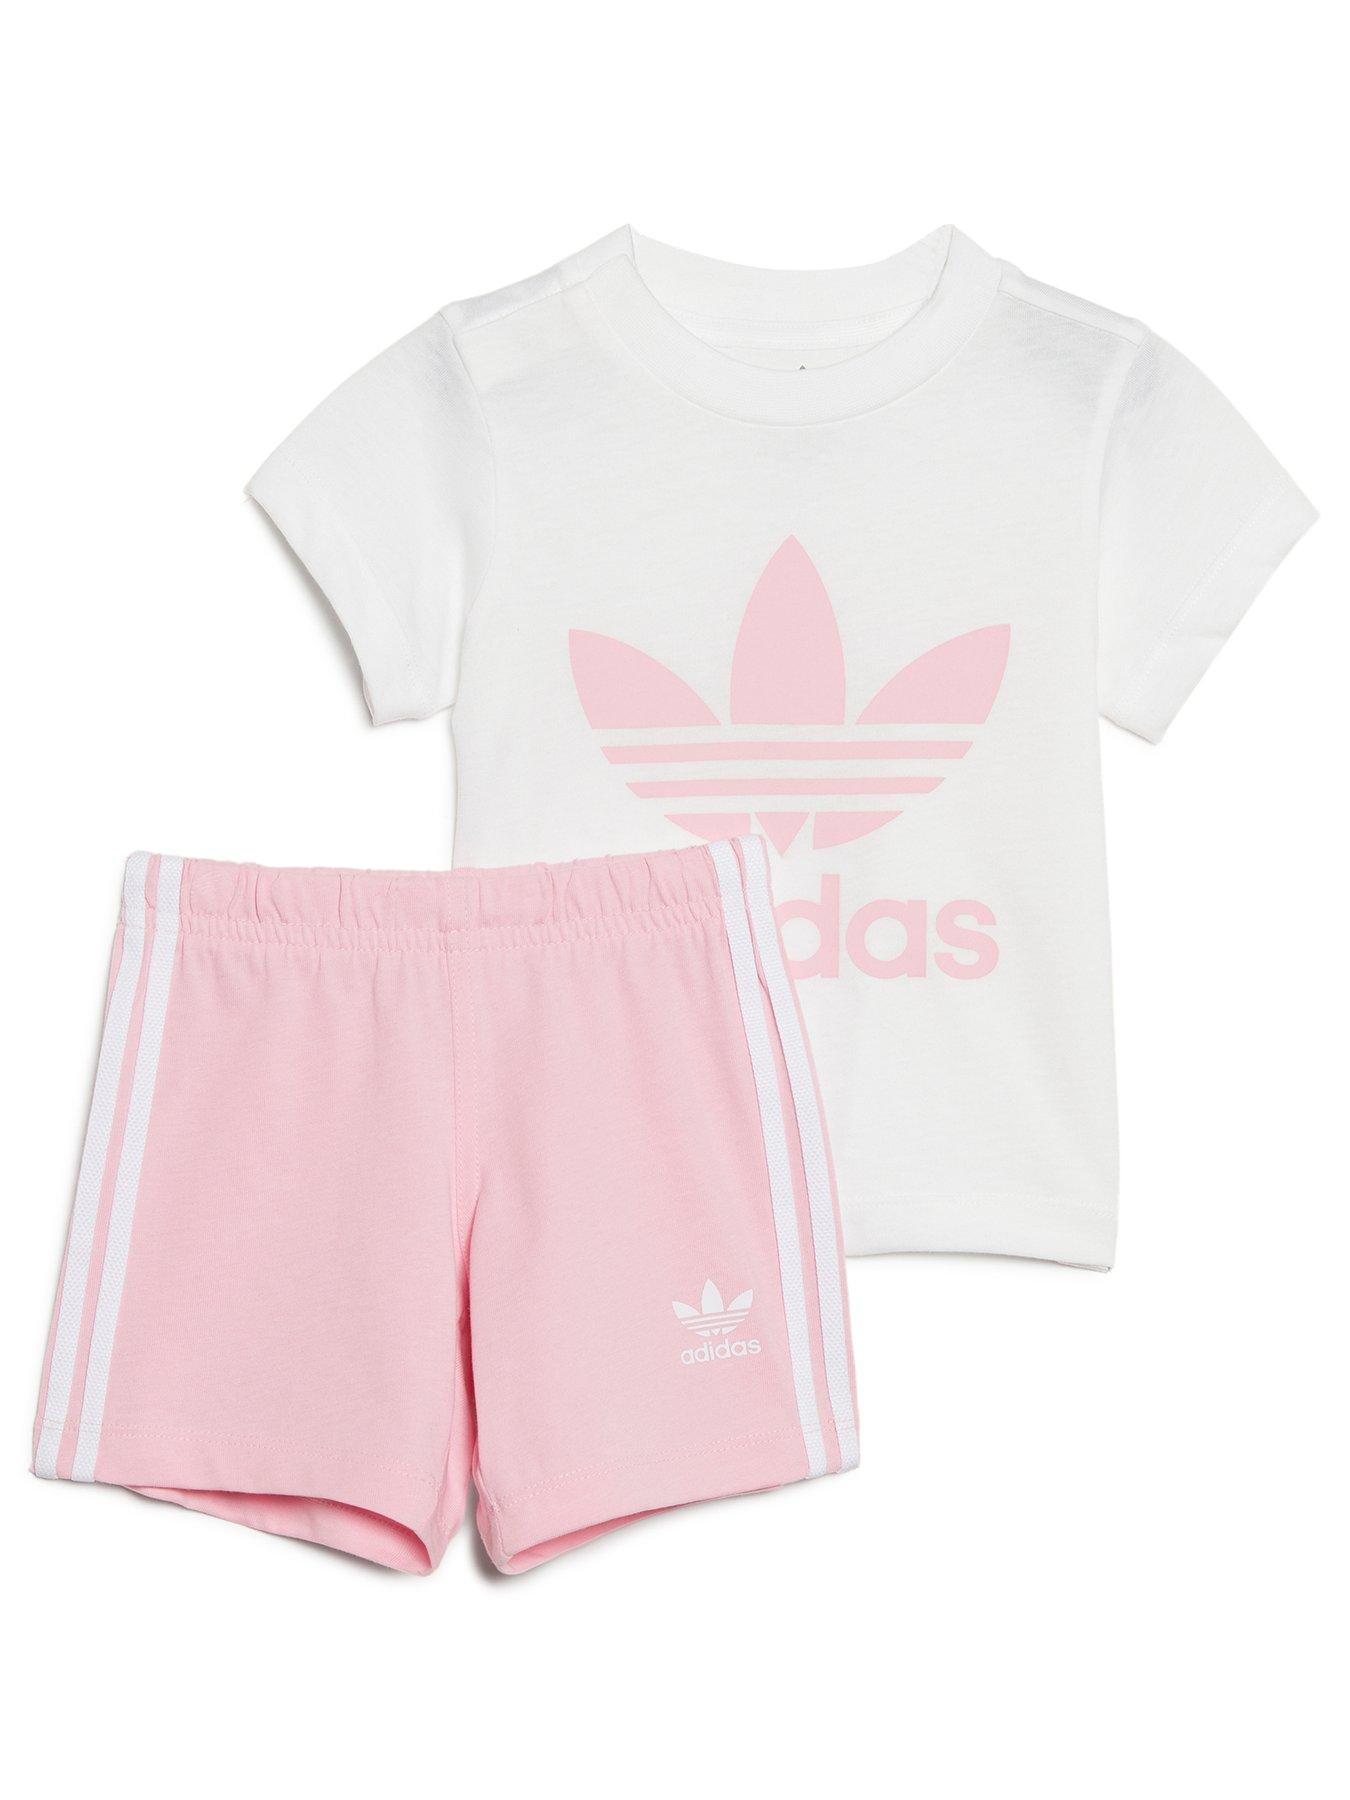  Adidas Originals Infant Unisex Trefoil Short & Tee Set